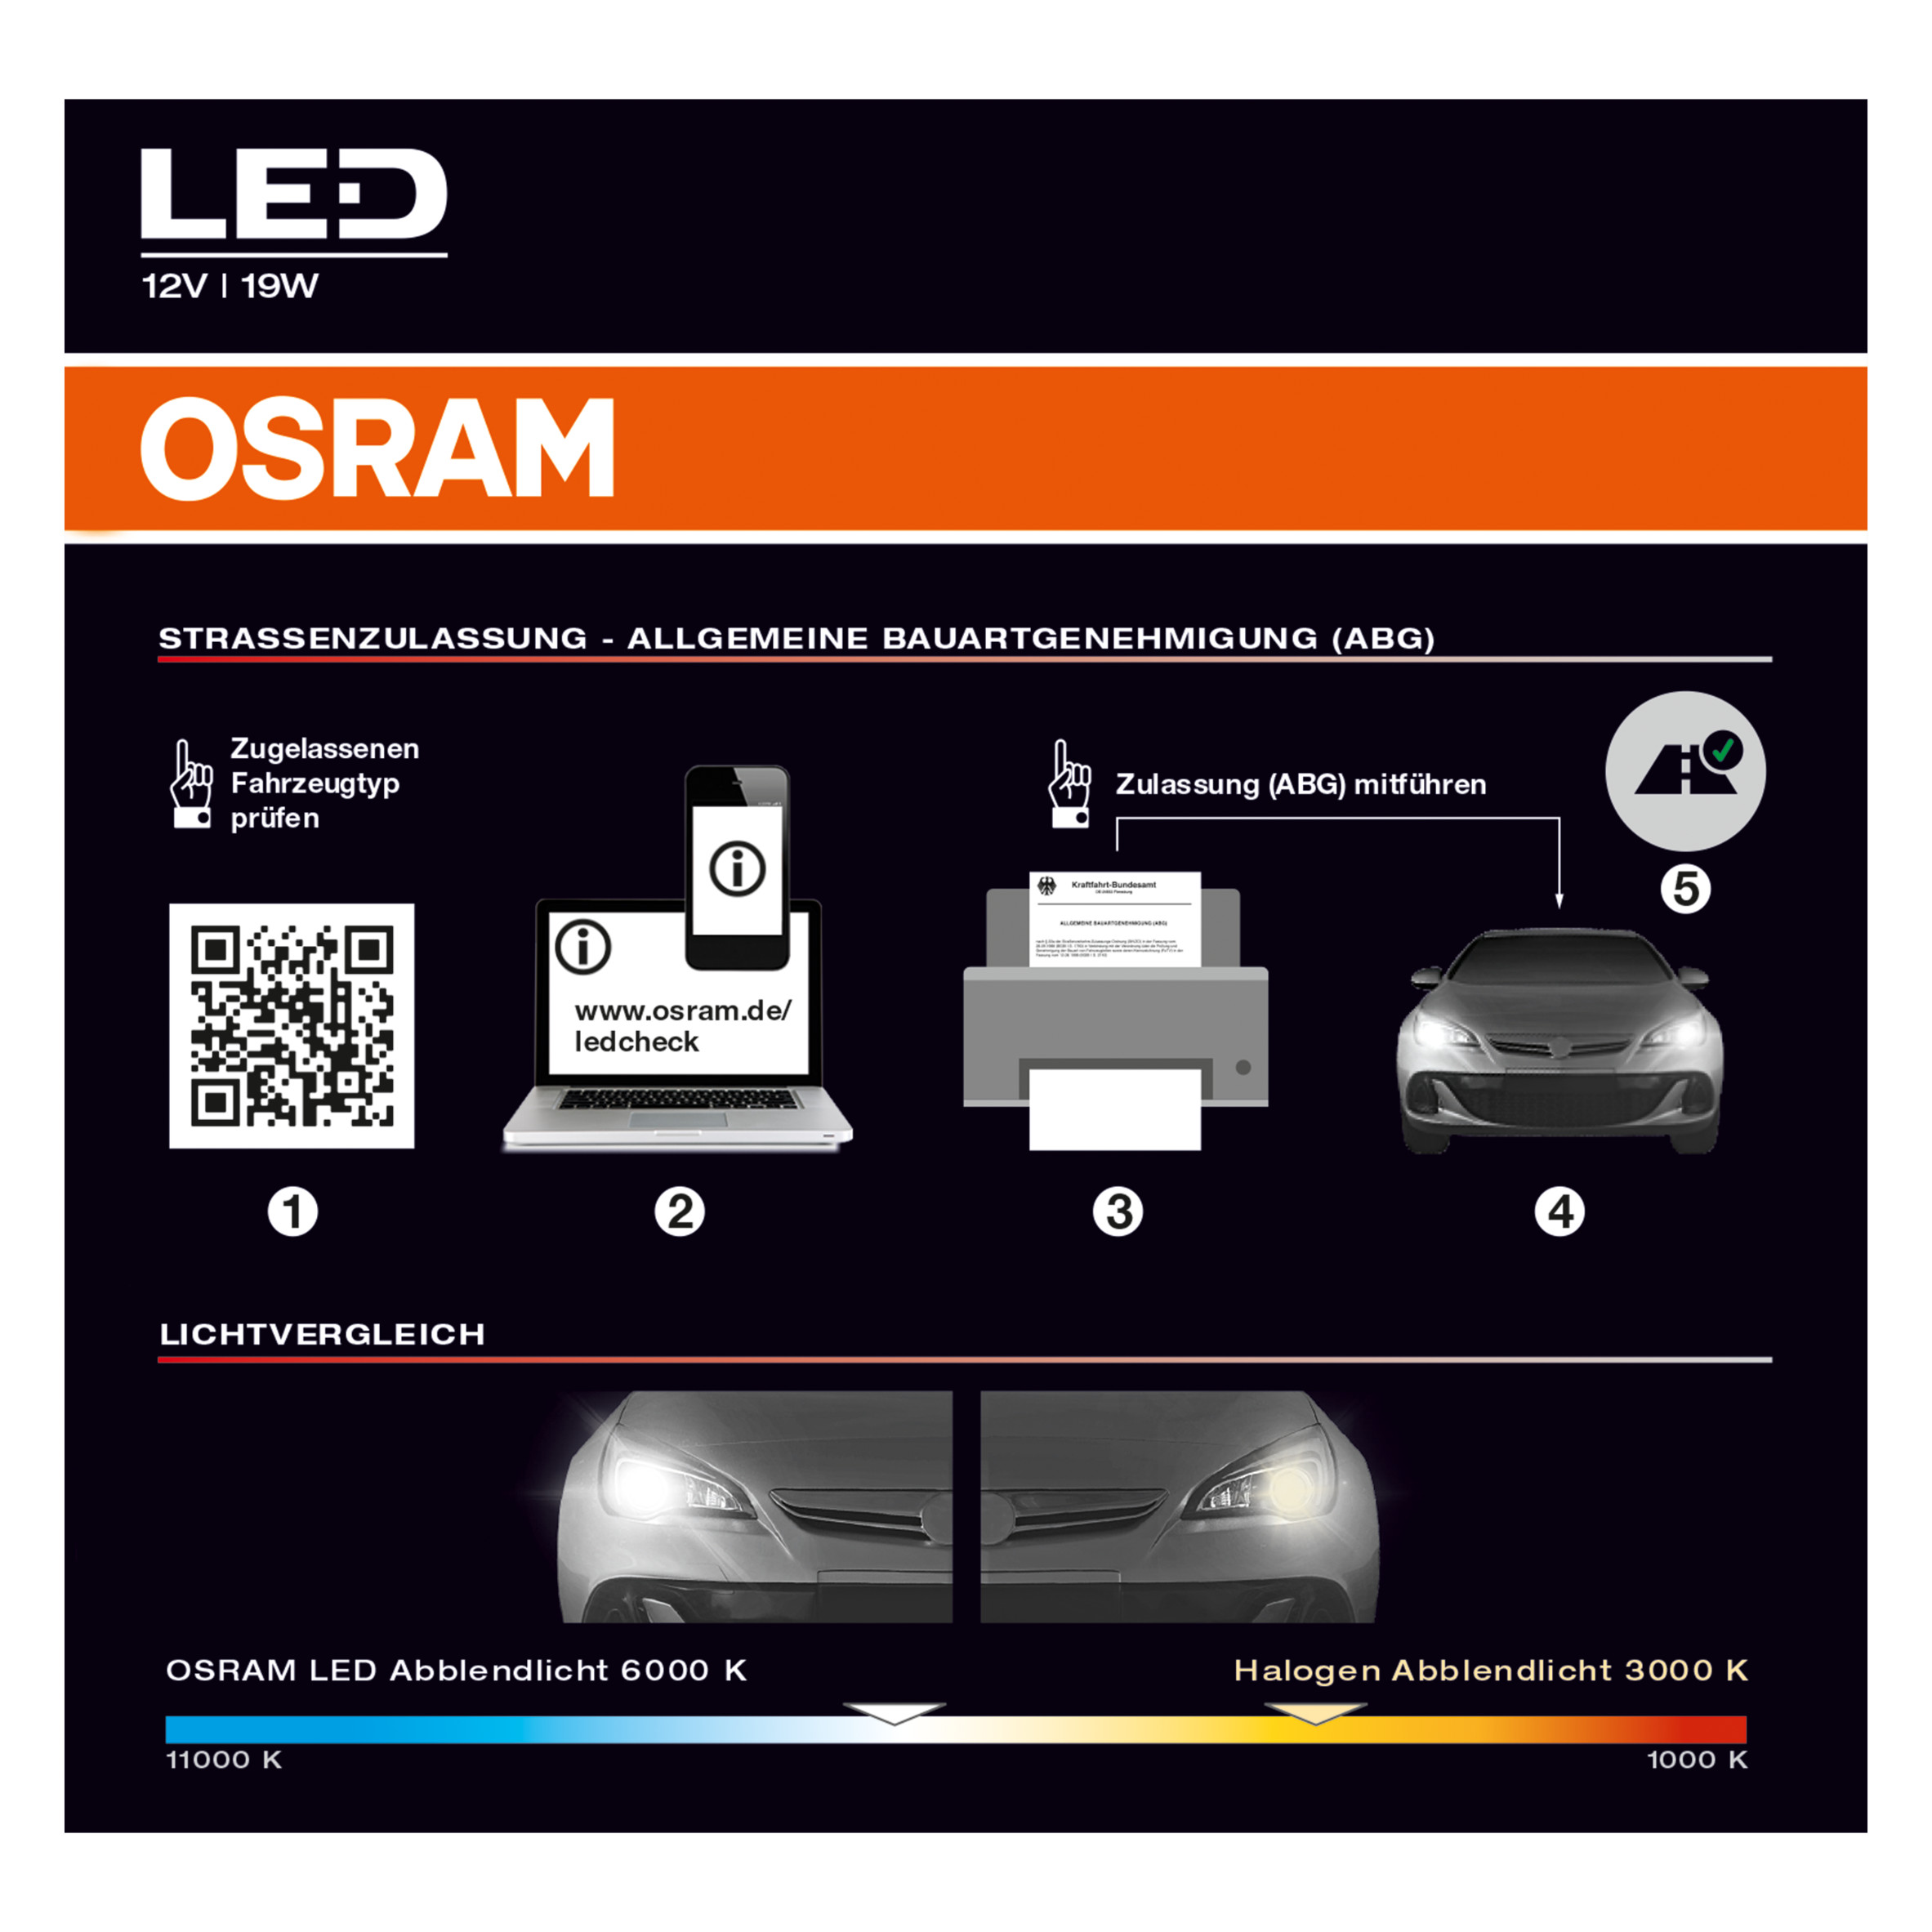 Osram NIGHT BREAKER H7 LED SET Nachrüstlampe jetzt bestellen!